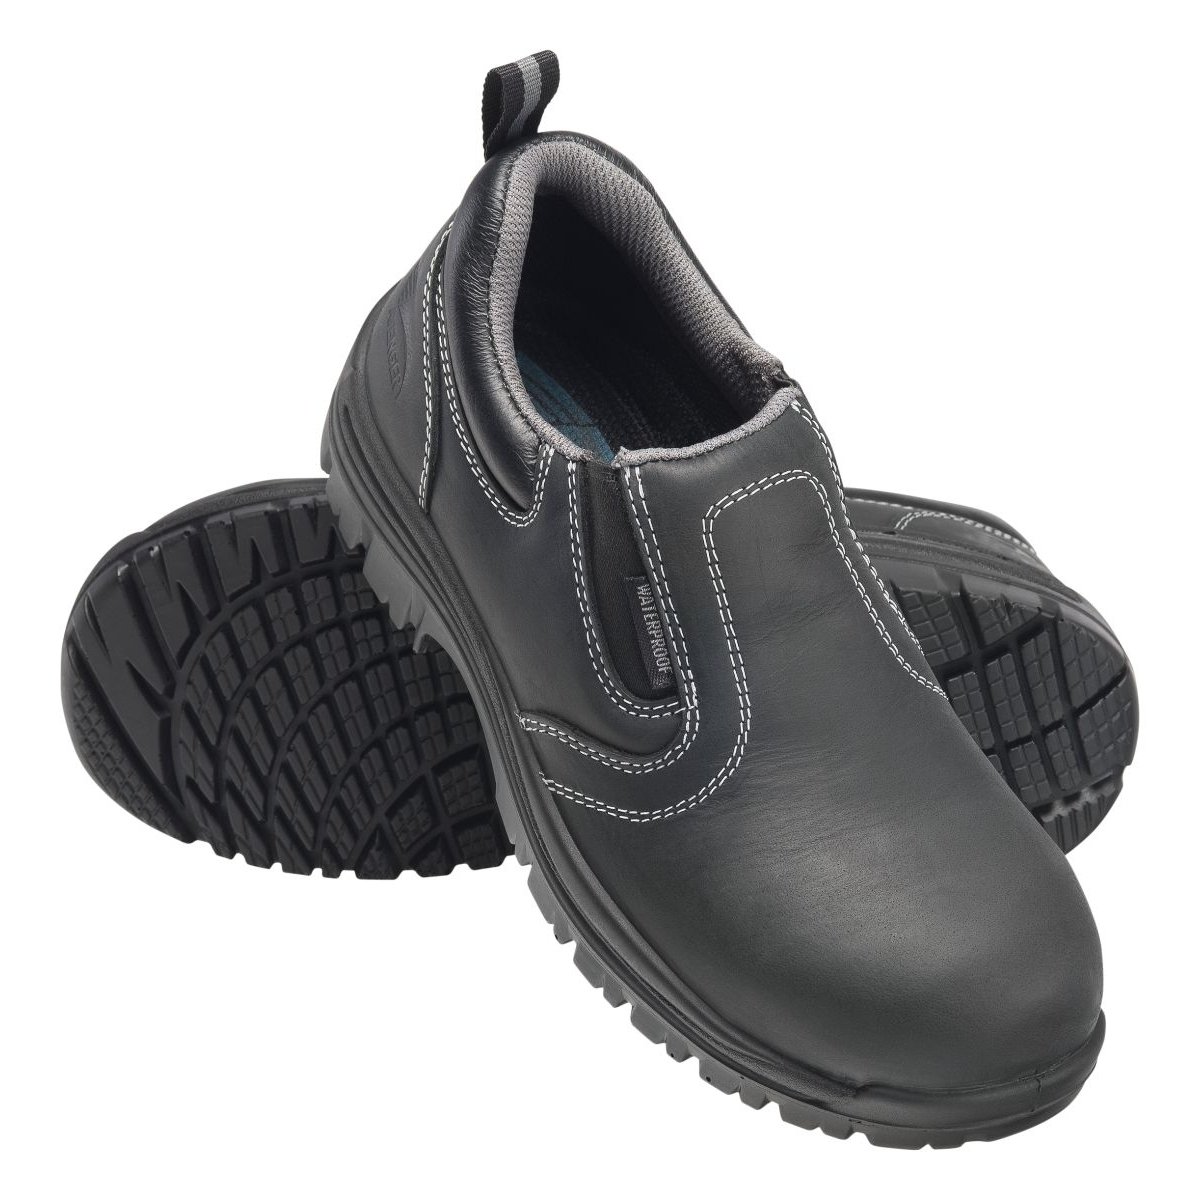 FSI FOOTWEAR SPECIALTIES INTERNATIONAL NAUTILUS Avenger Women's Foreman Slip-On Composite Toe PR Work Shoes Black - A7169 - BLACK, 10-M